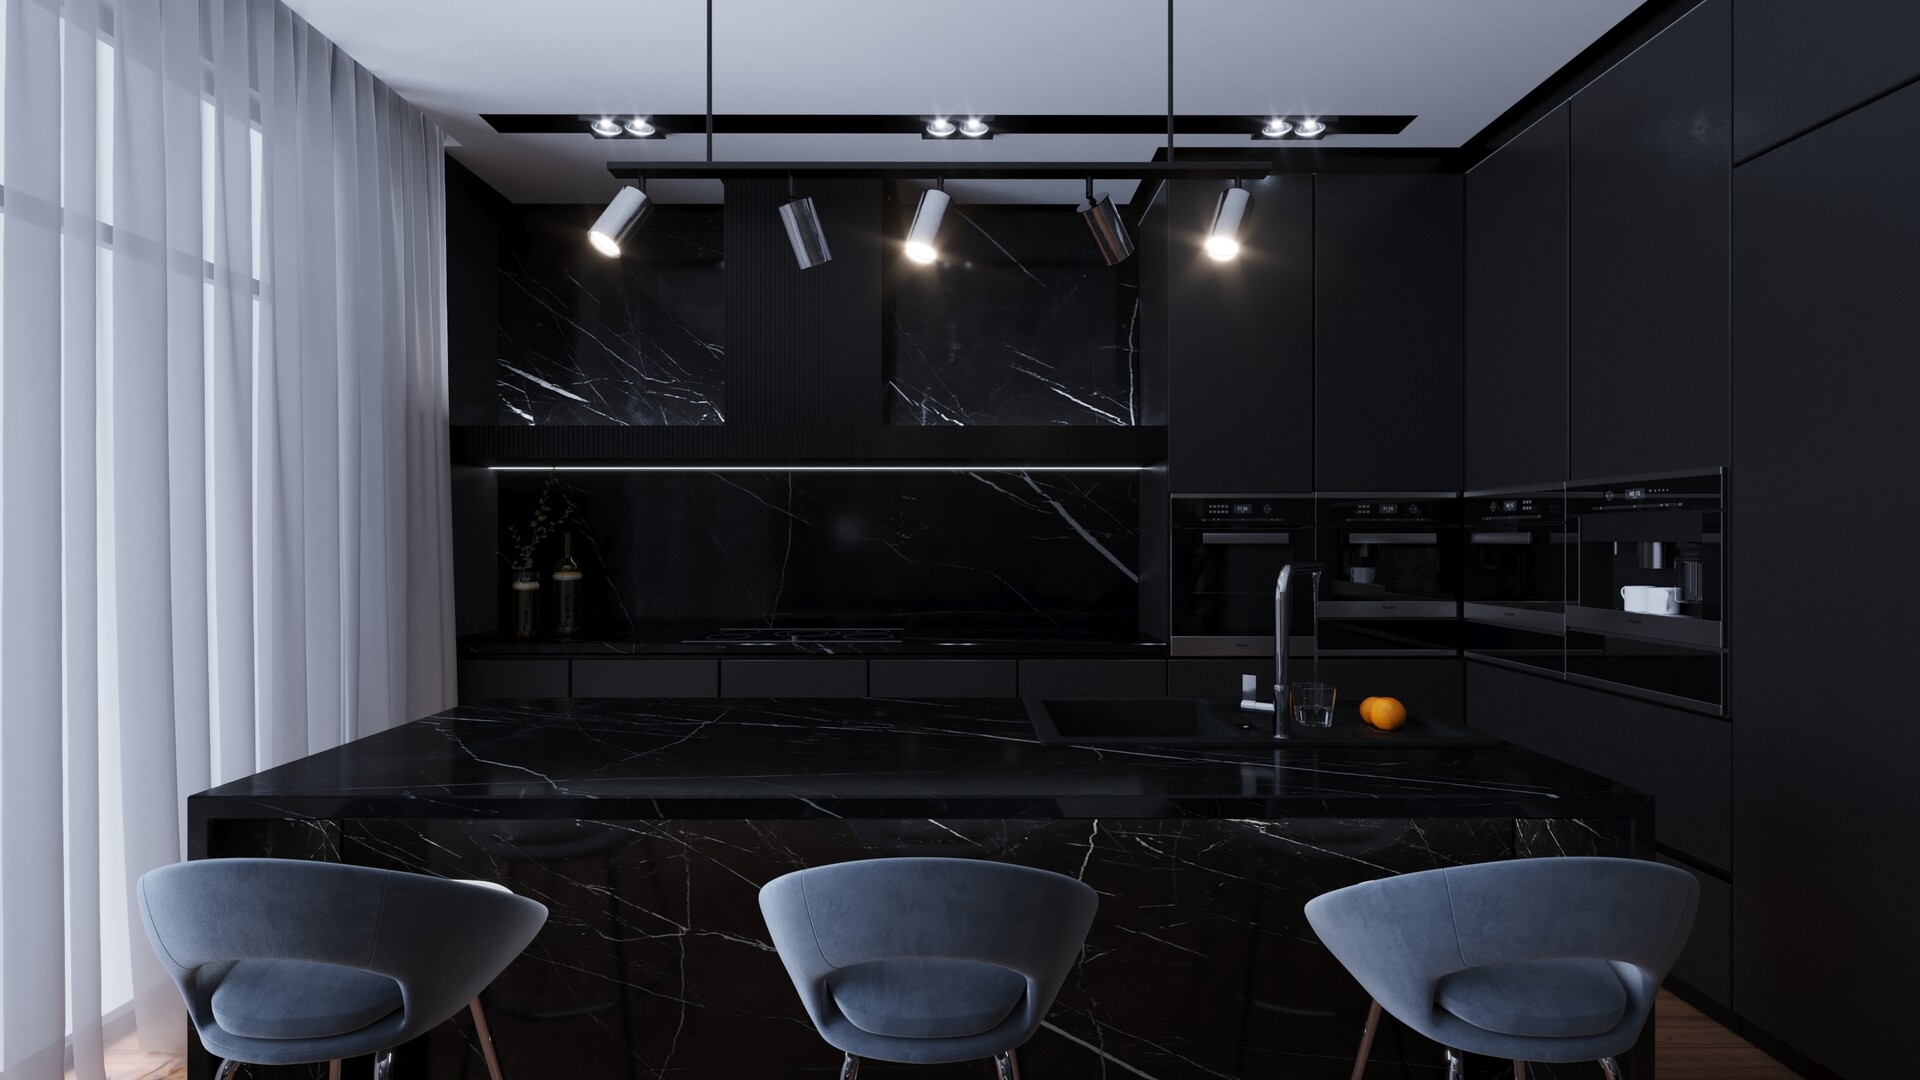 ArtStation - Concept Kitchen